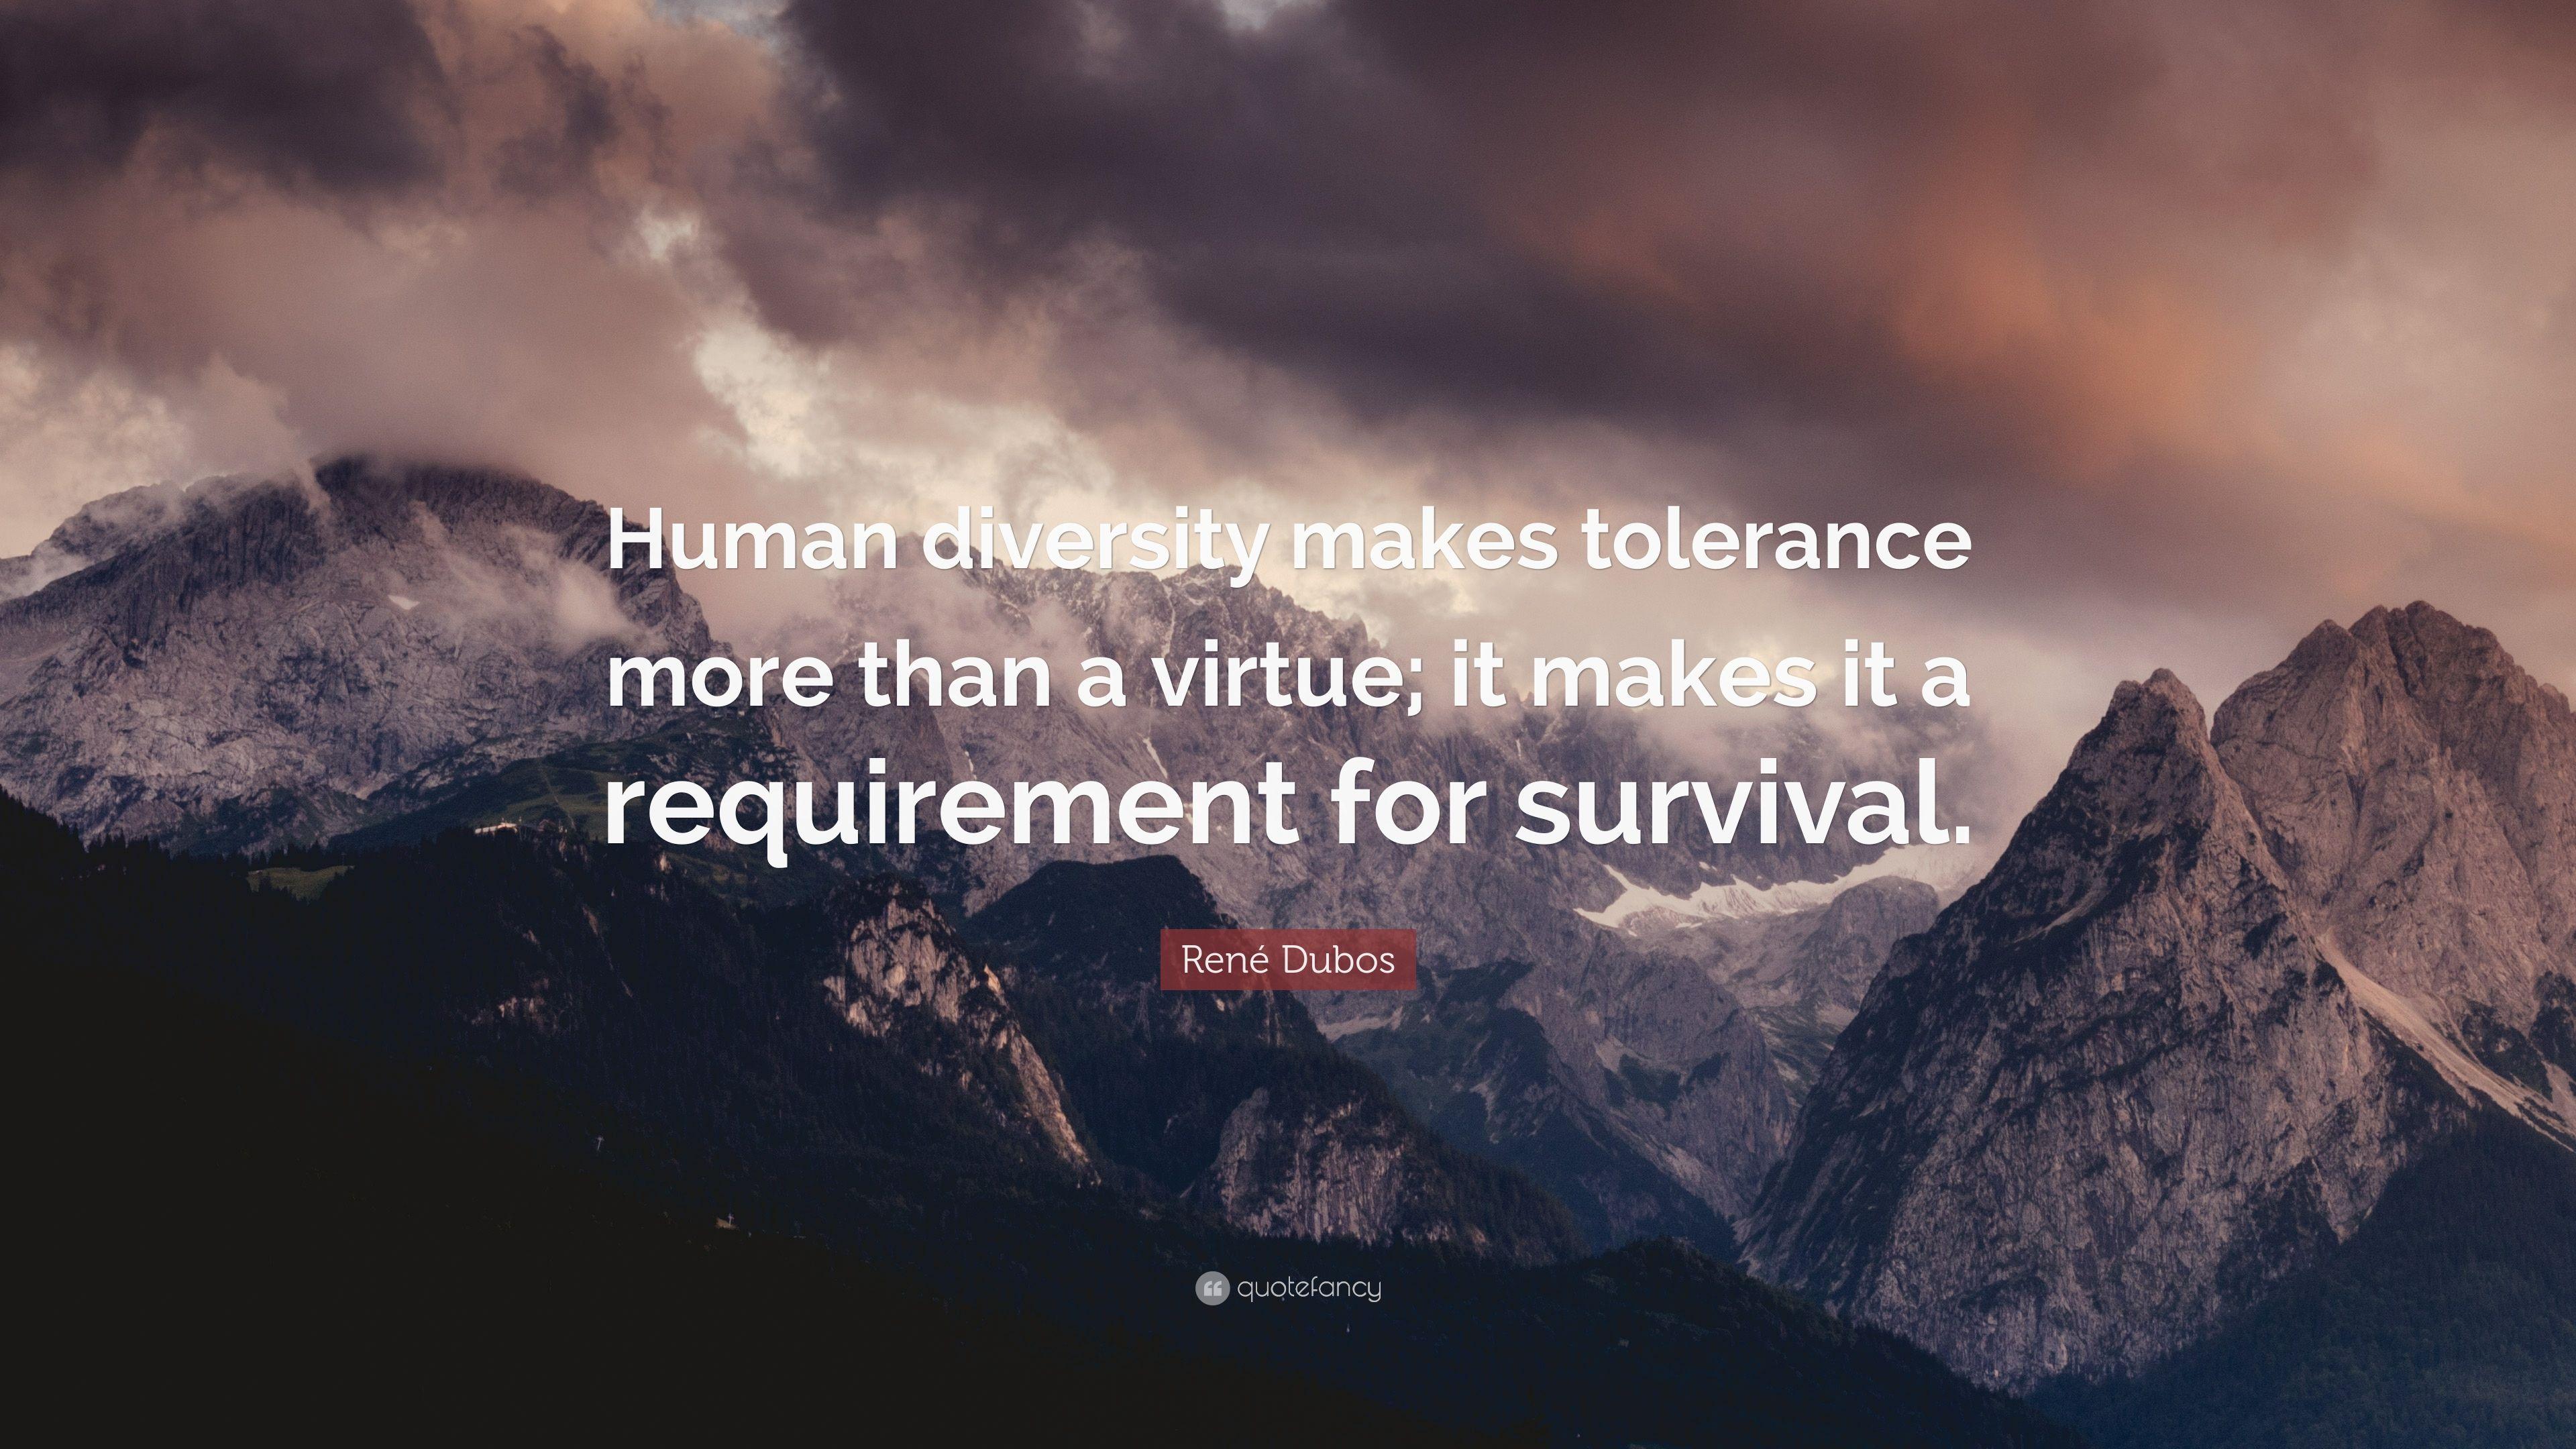 René Dubos Quote: “Human diversity makes tolerance more than a